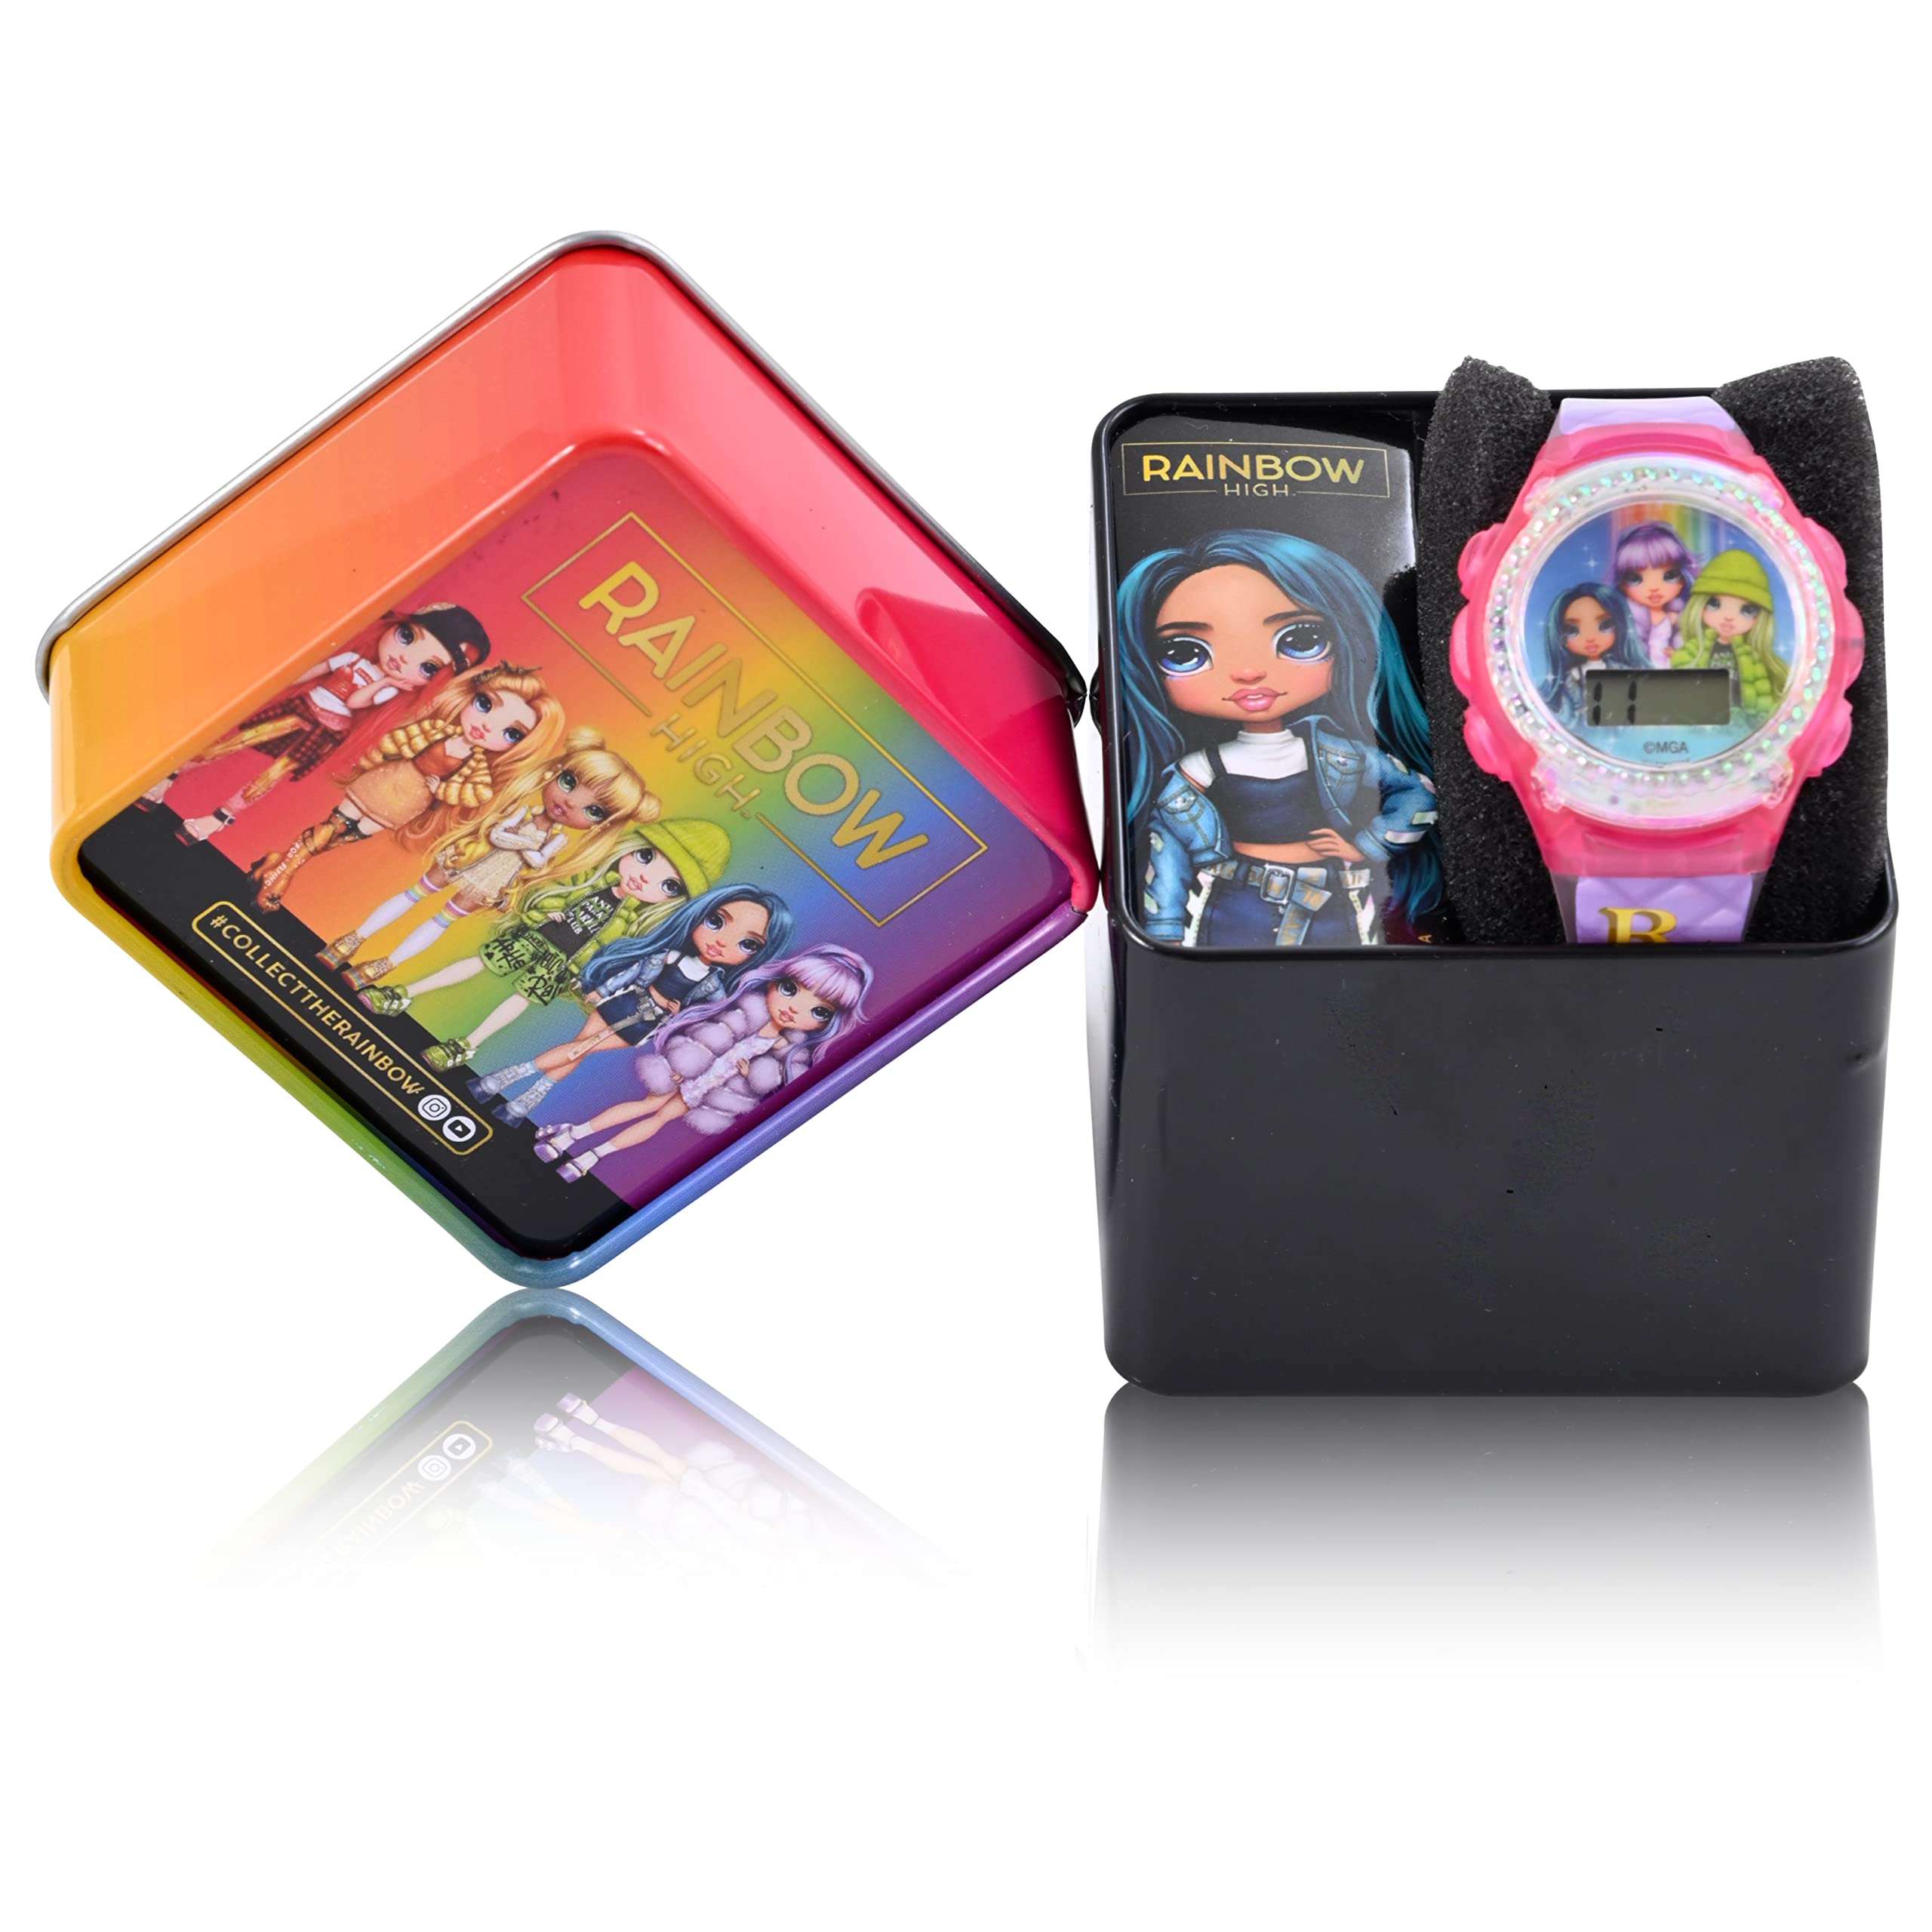 Accutime Rainbow High Kids Digital Watch - LED Flashing Lights, LCD Watch Display, Kids, Girls Watch, Plastic Strap in Purple (Model: RNB4002AZ)